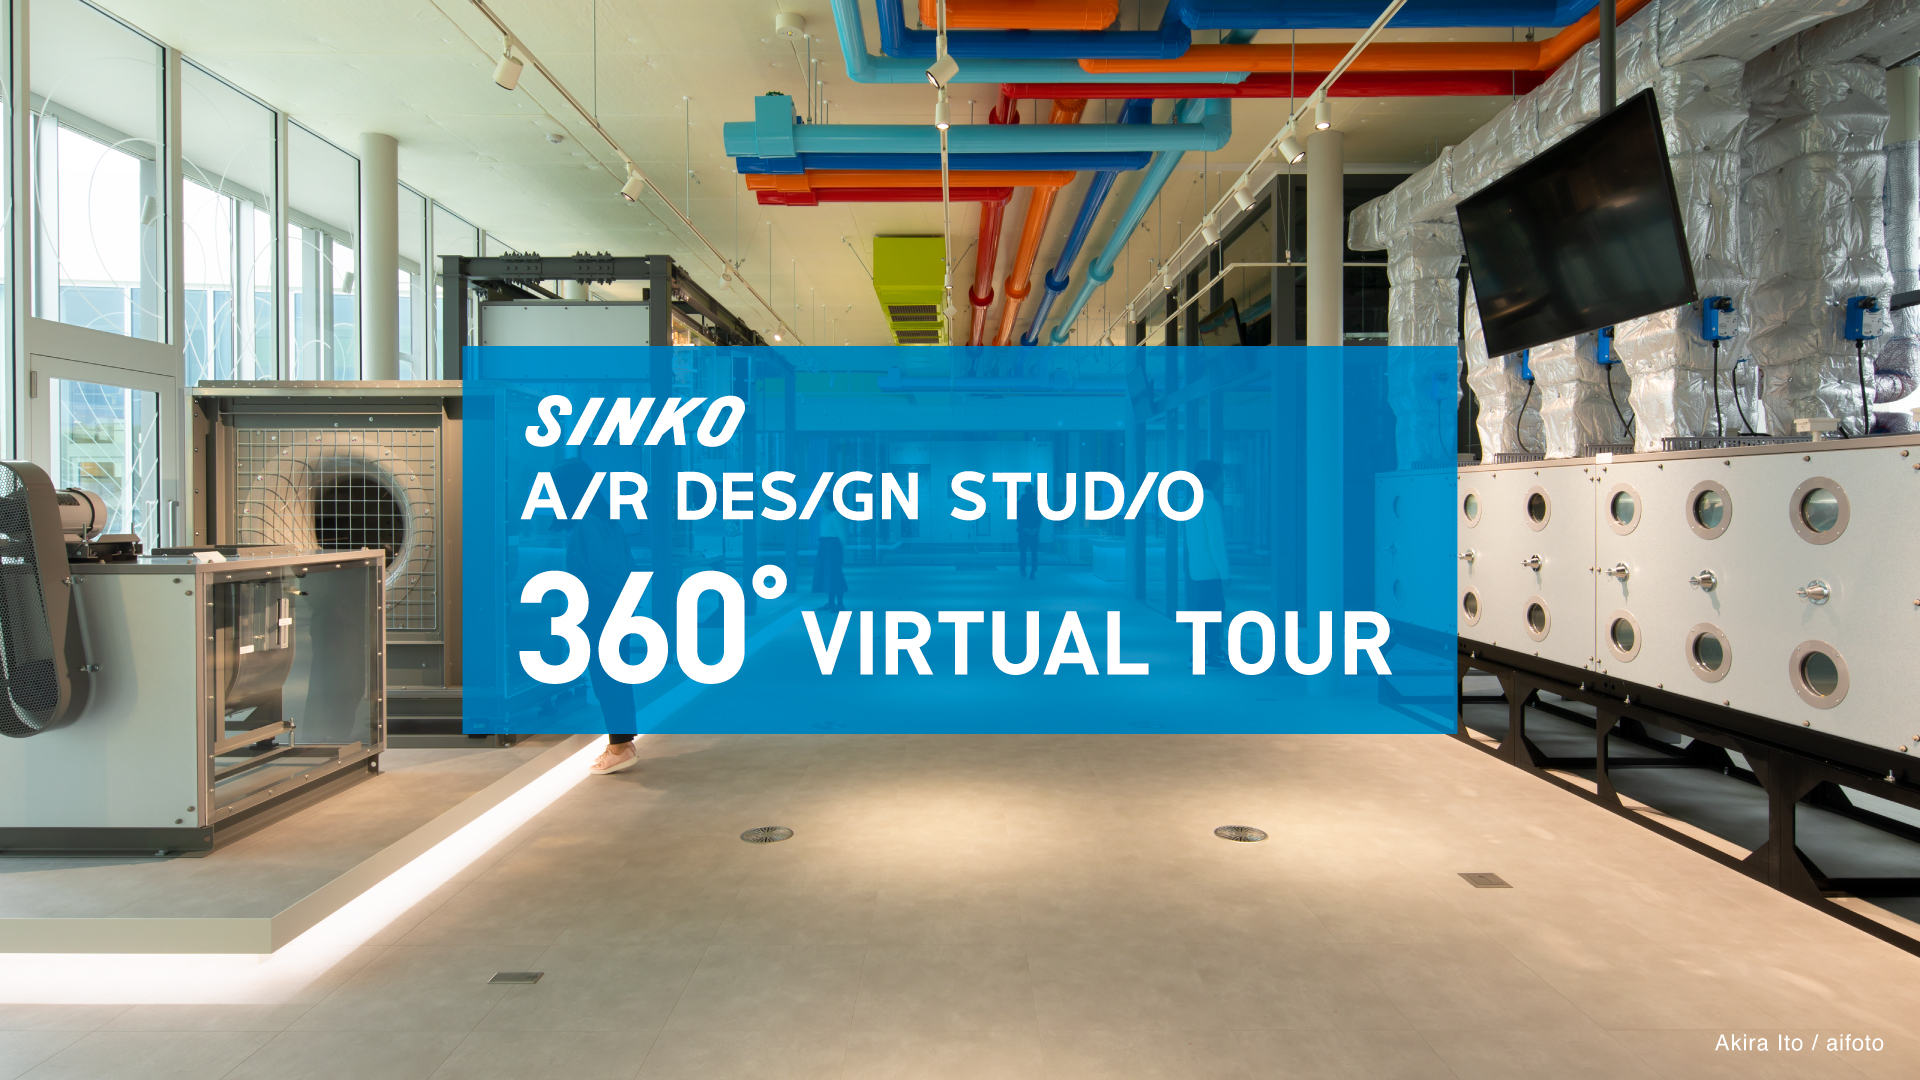 SINKO AIR DESIGN STUDIO　360°VIRTUAL TOUR動画をアップしました